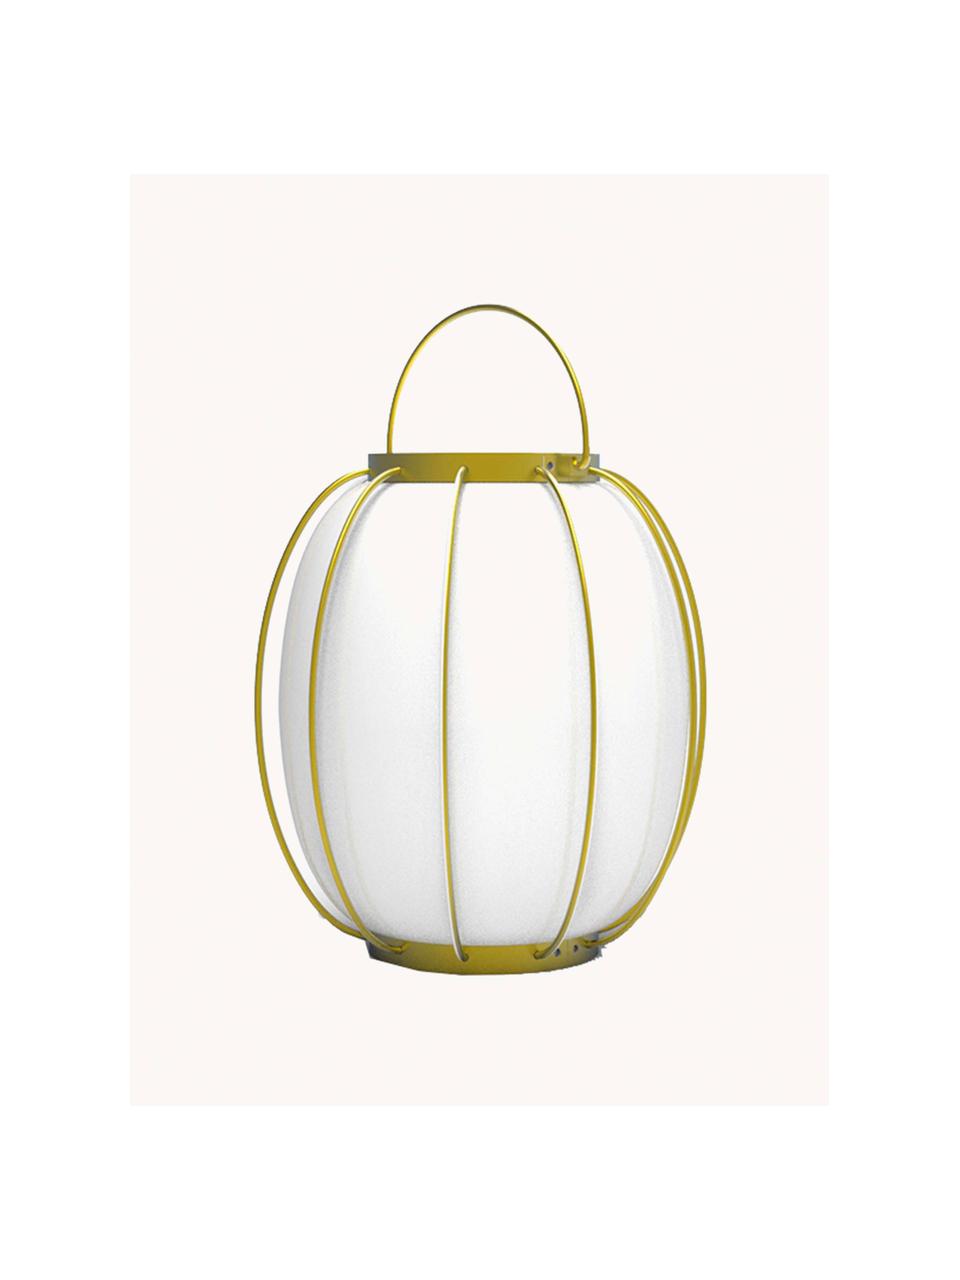 Mobile Outdoor LED-Tischlampe Lady, dimmbar, Lampenschirm: Kunststoff, Weiß, Goldfarben, Ø 26 x H 27 cm